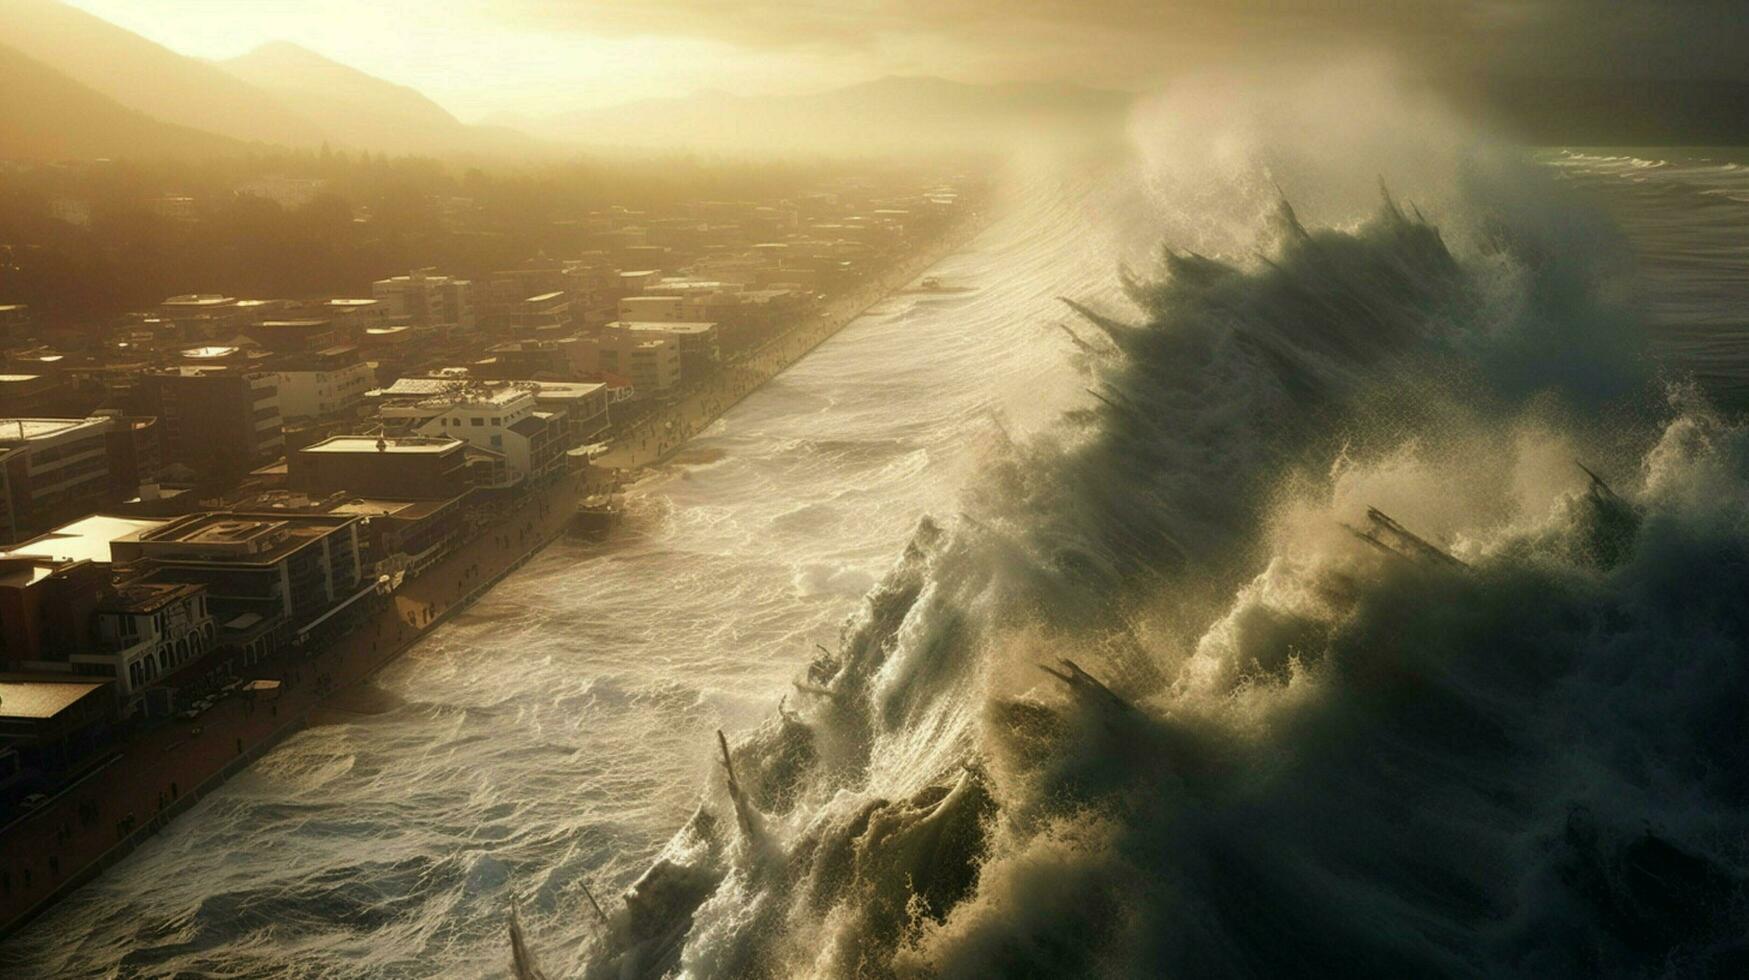 tsunami wave rolls toward shoreline battering the photo